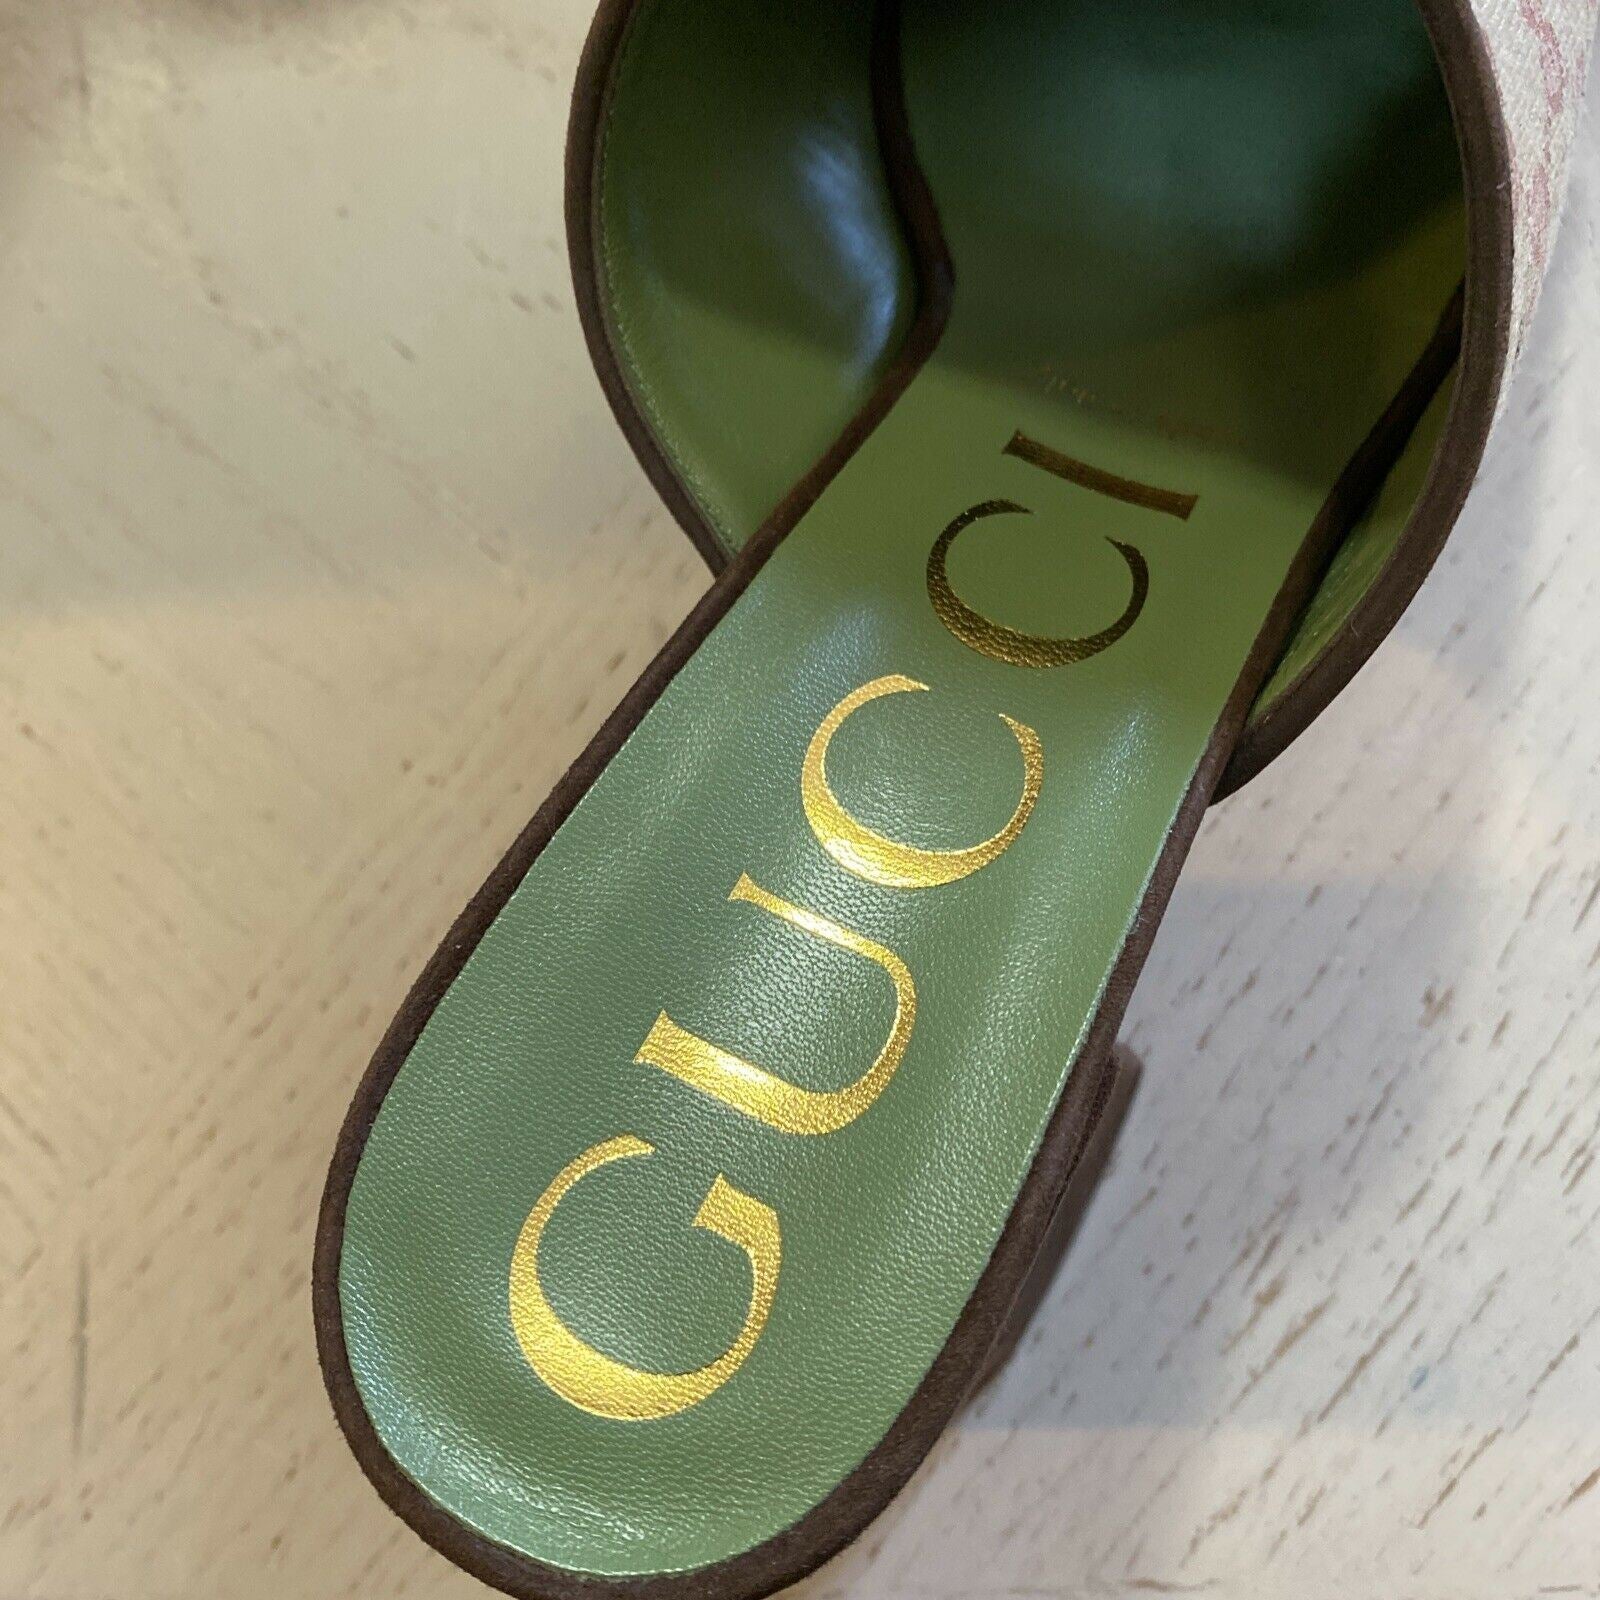 NIB Gucci Women’s GG Monogram Sandal Shoes Beige 8 US ( 38 Eu ) Italy